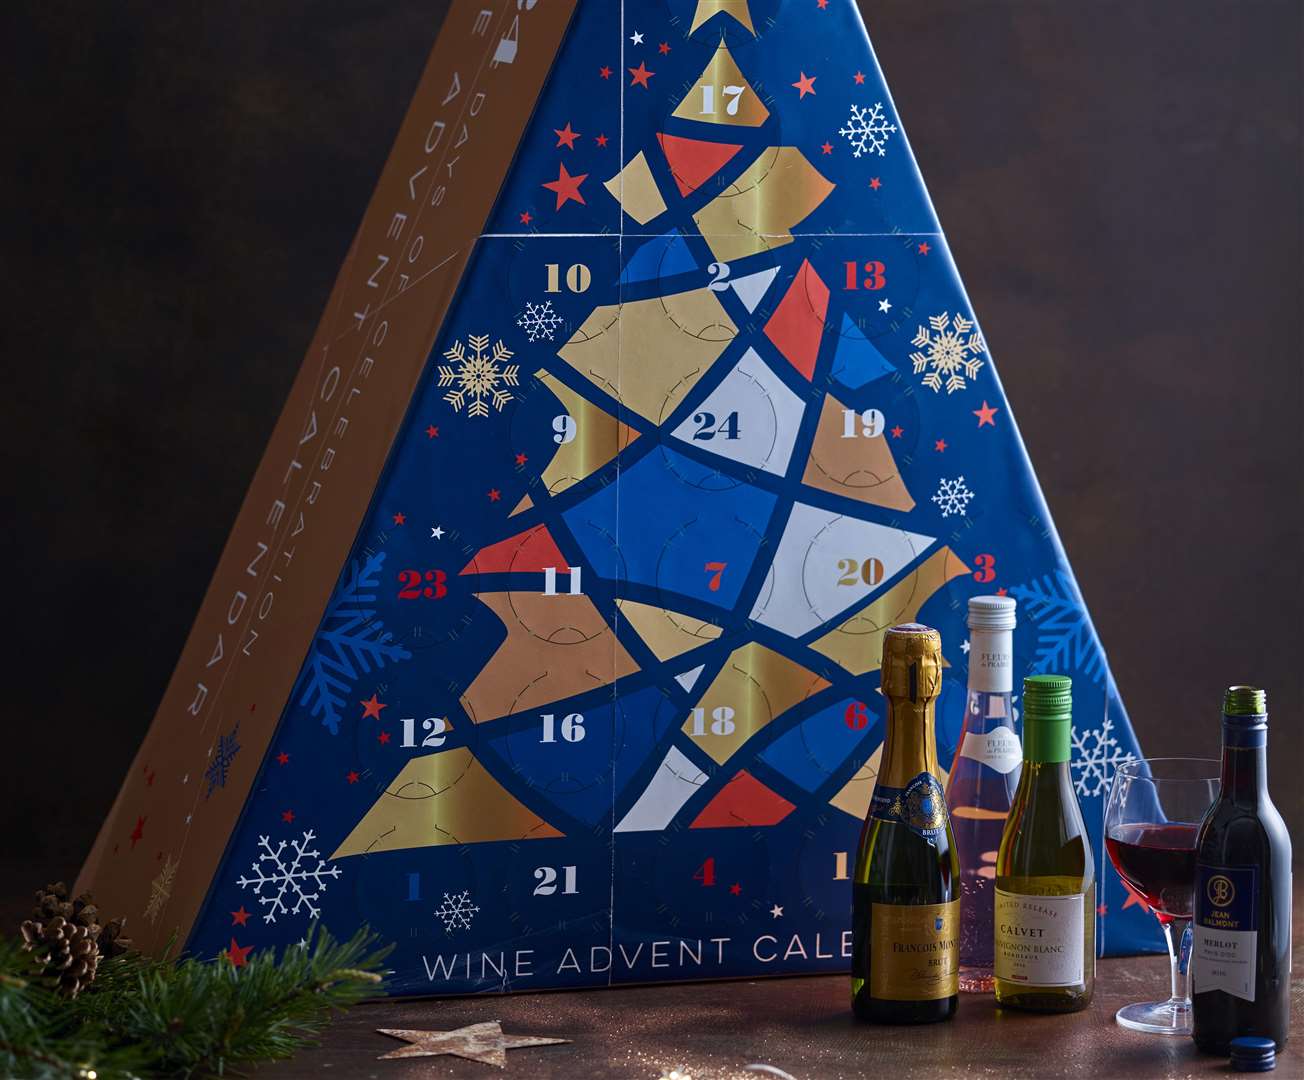 Aldi wine advent calendar on sale Sunday, November 4